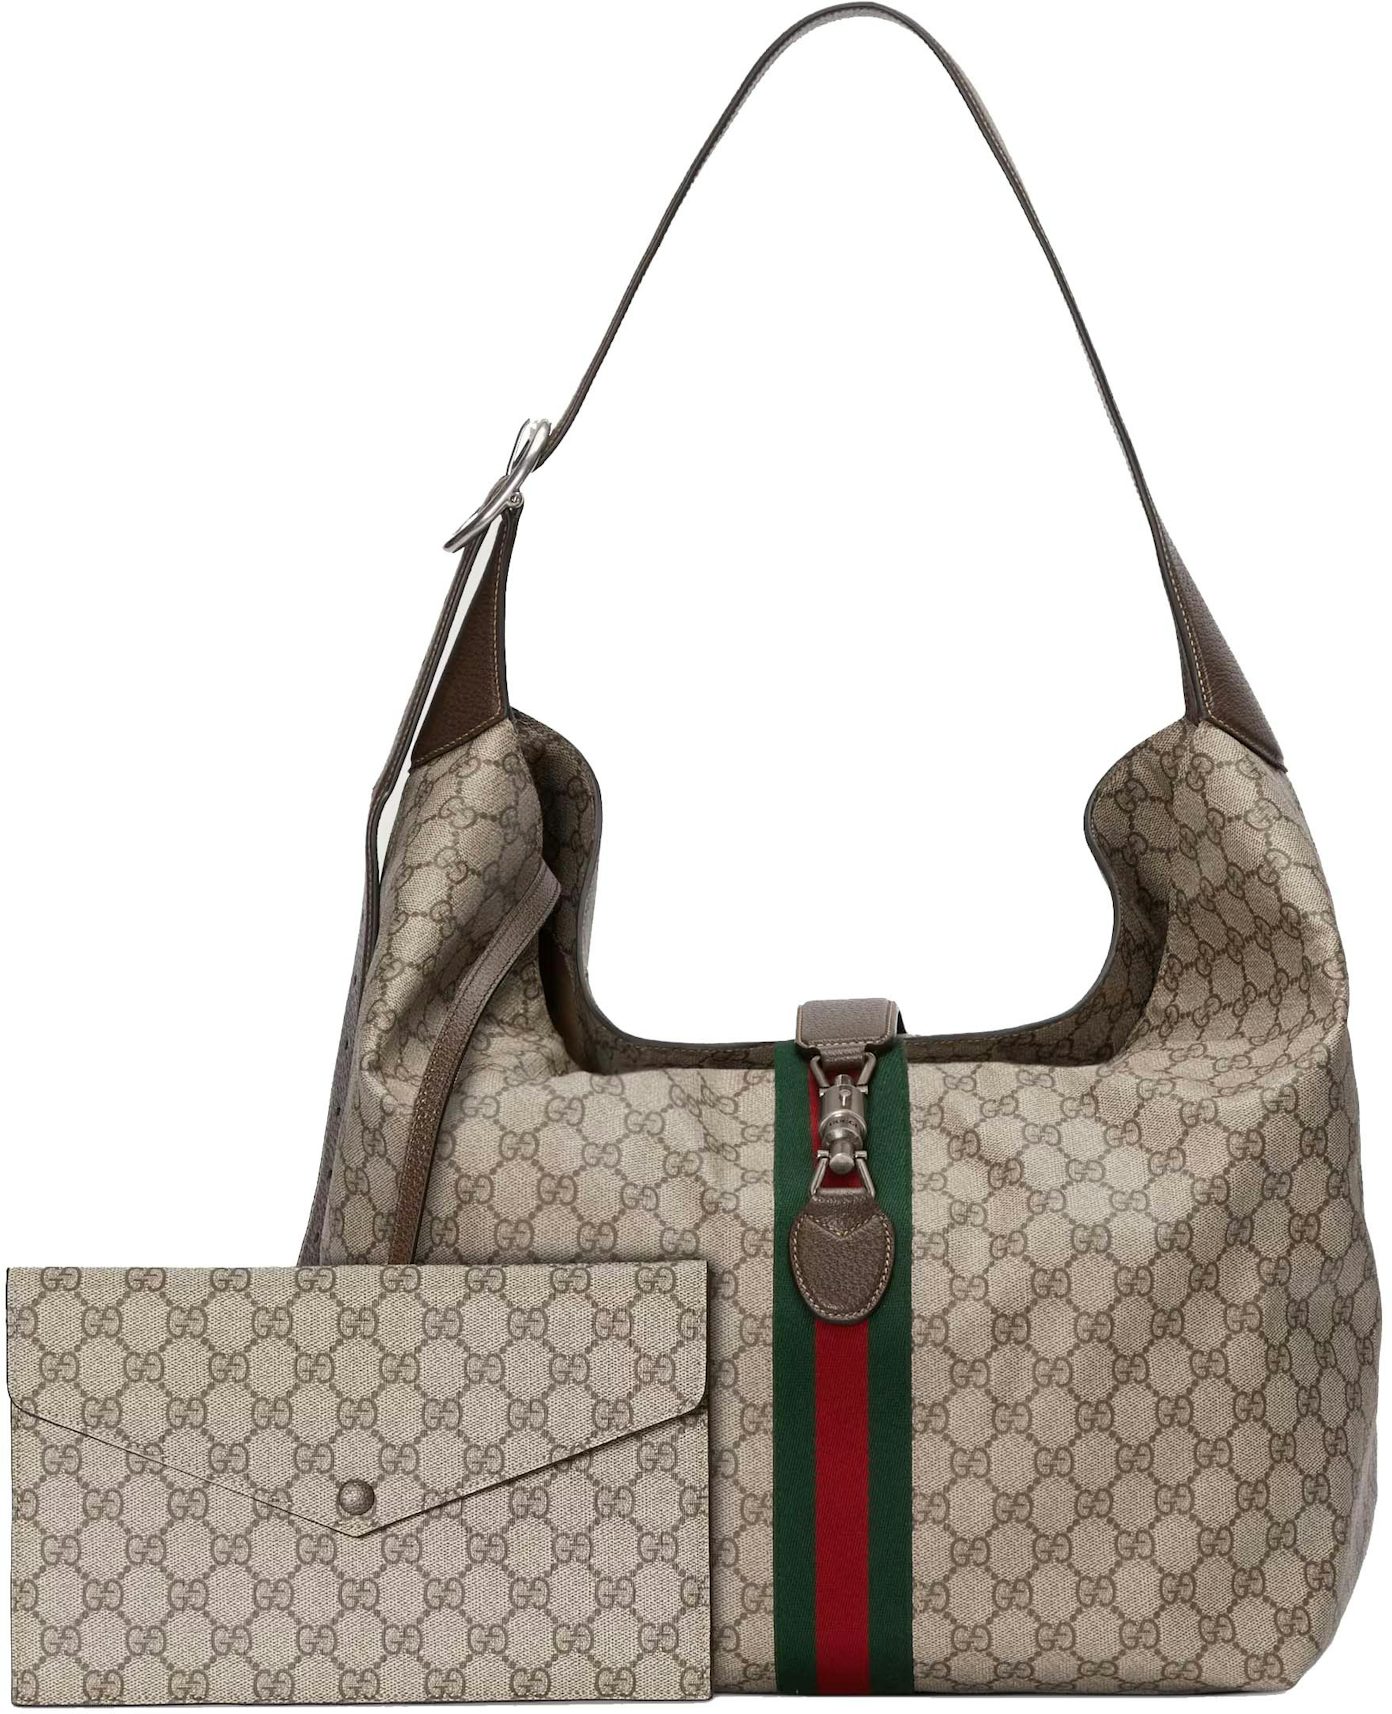 Gucci Jackie 1961 Medium Shoulder Bag Beige/Ebony in GG Supreme with  Palladium-tone - US